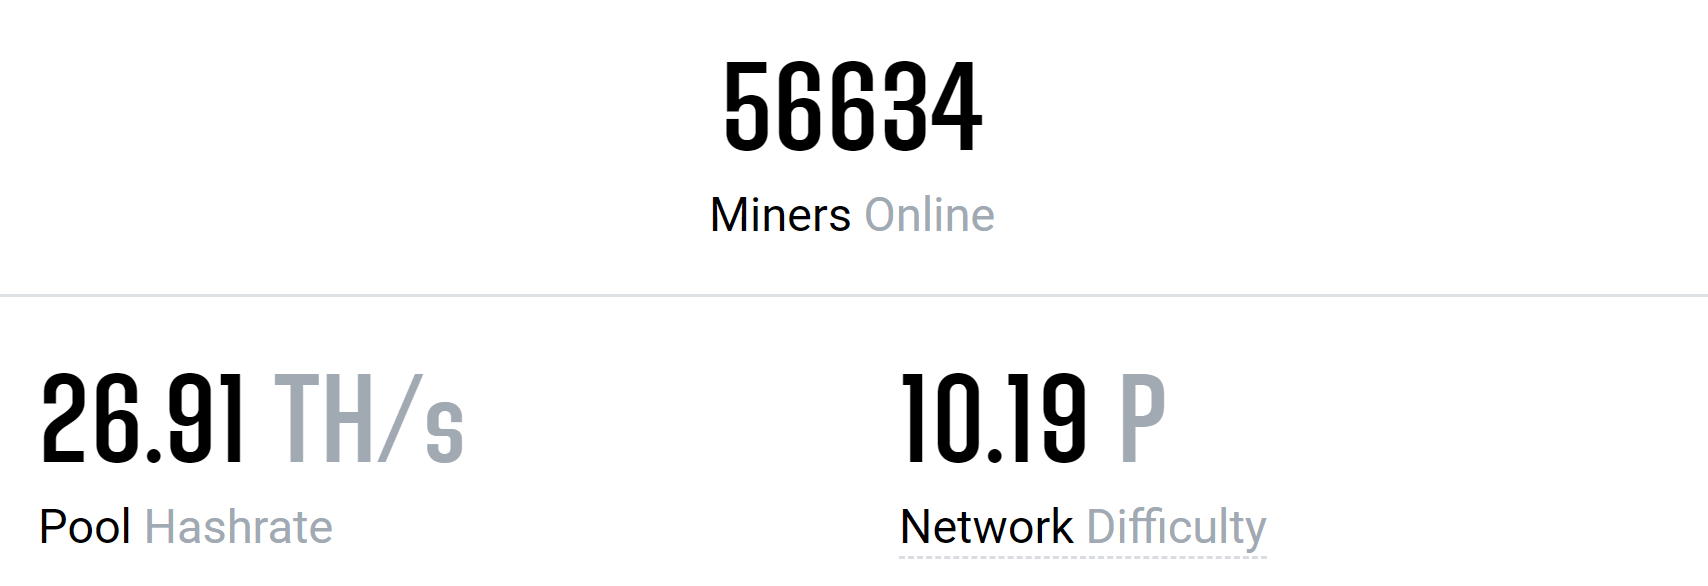 miners_online_56K